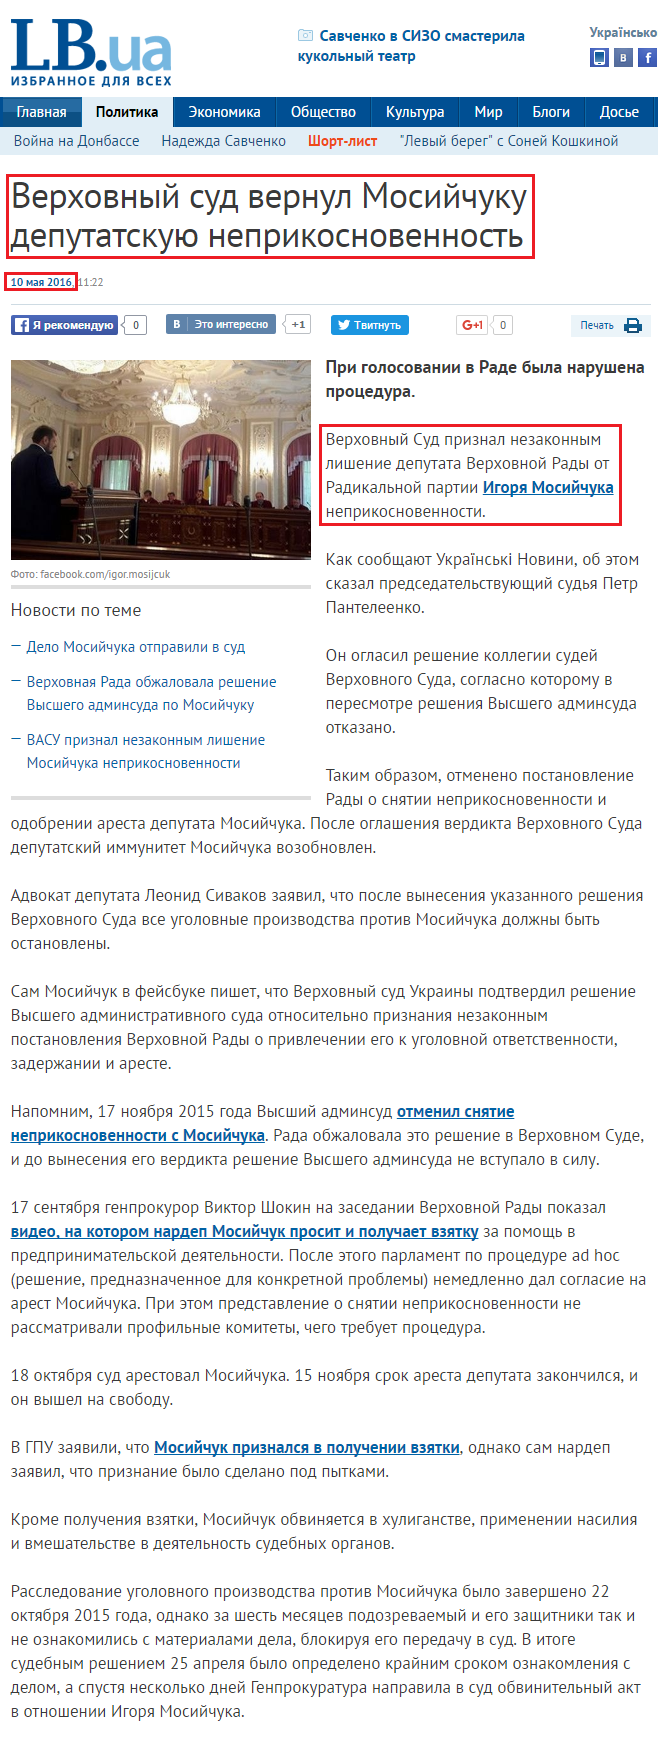 http://lb.ua/news/2016/05/10/334803_verhovniy_sud_priznal_nezakonnim.html